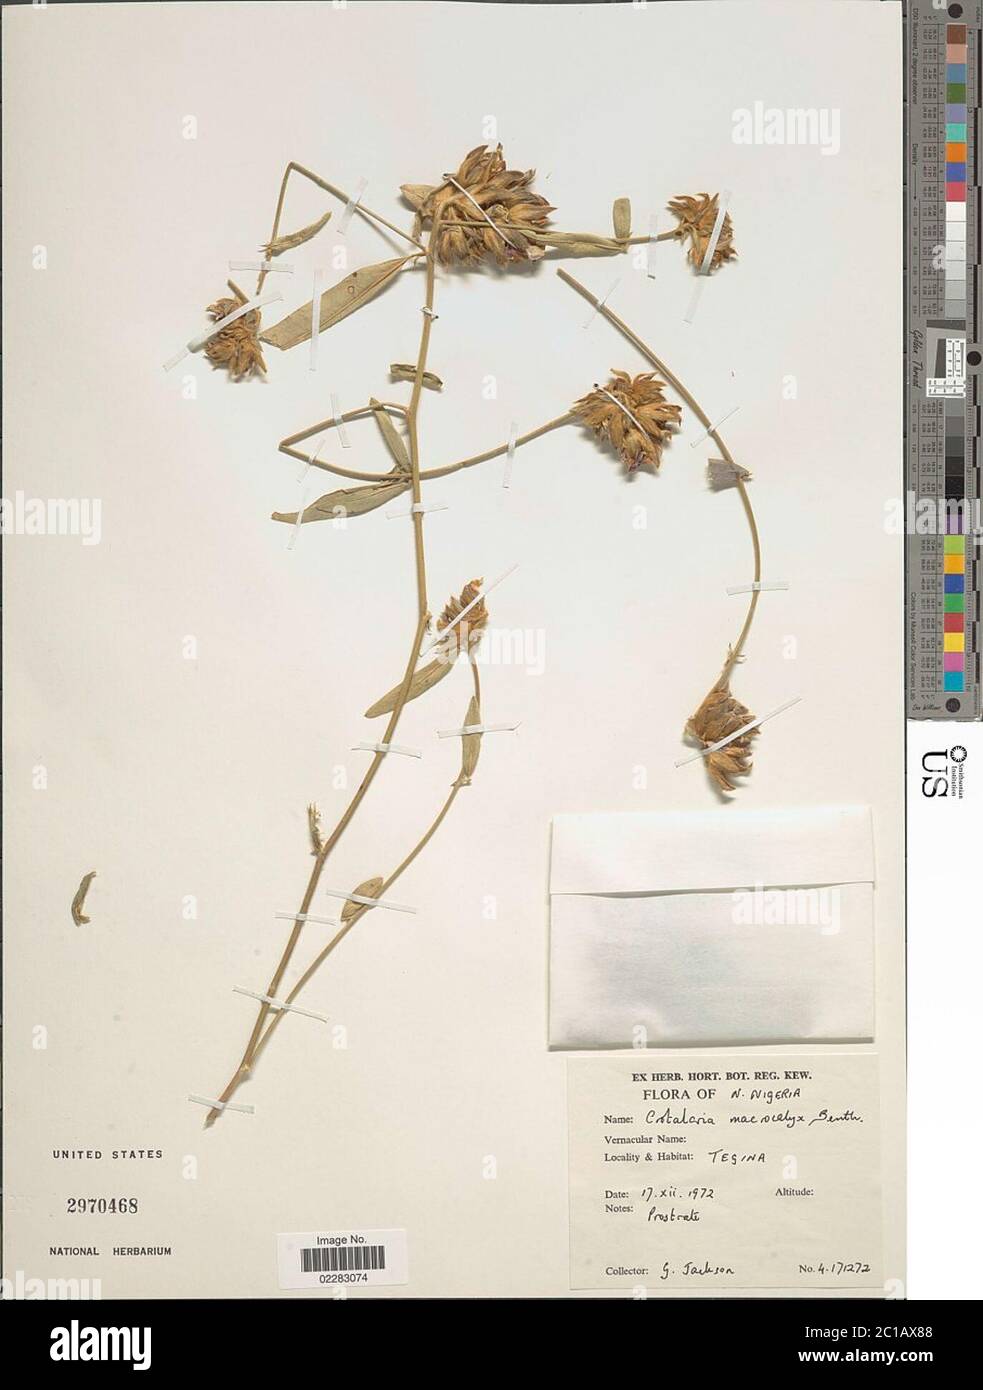 Crotalaria macrocalyx Benth Crotalaria macrocalyx Benth. Stock Photo